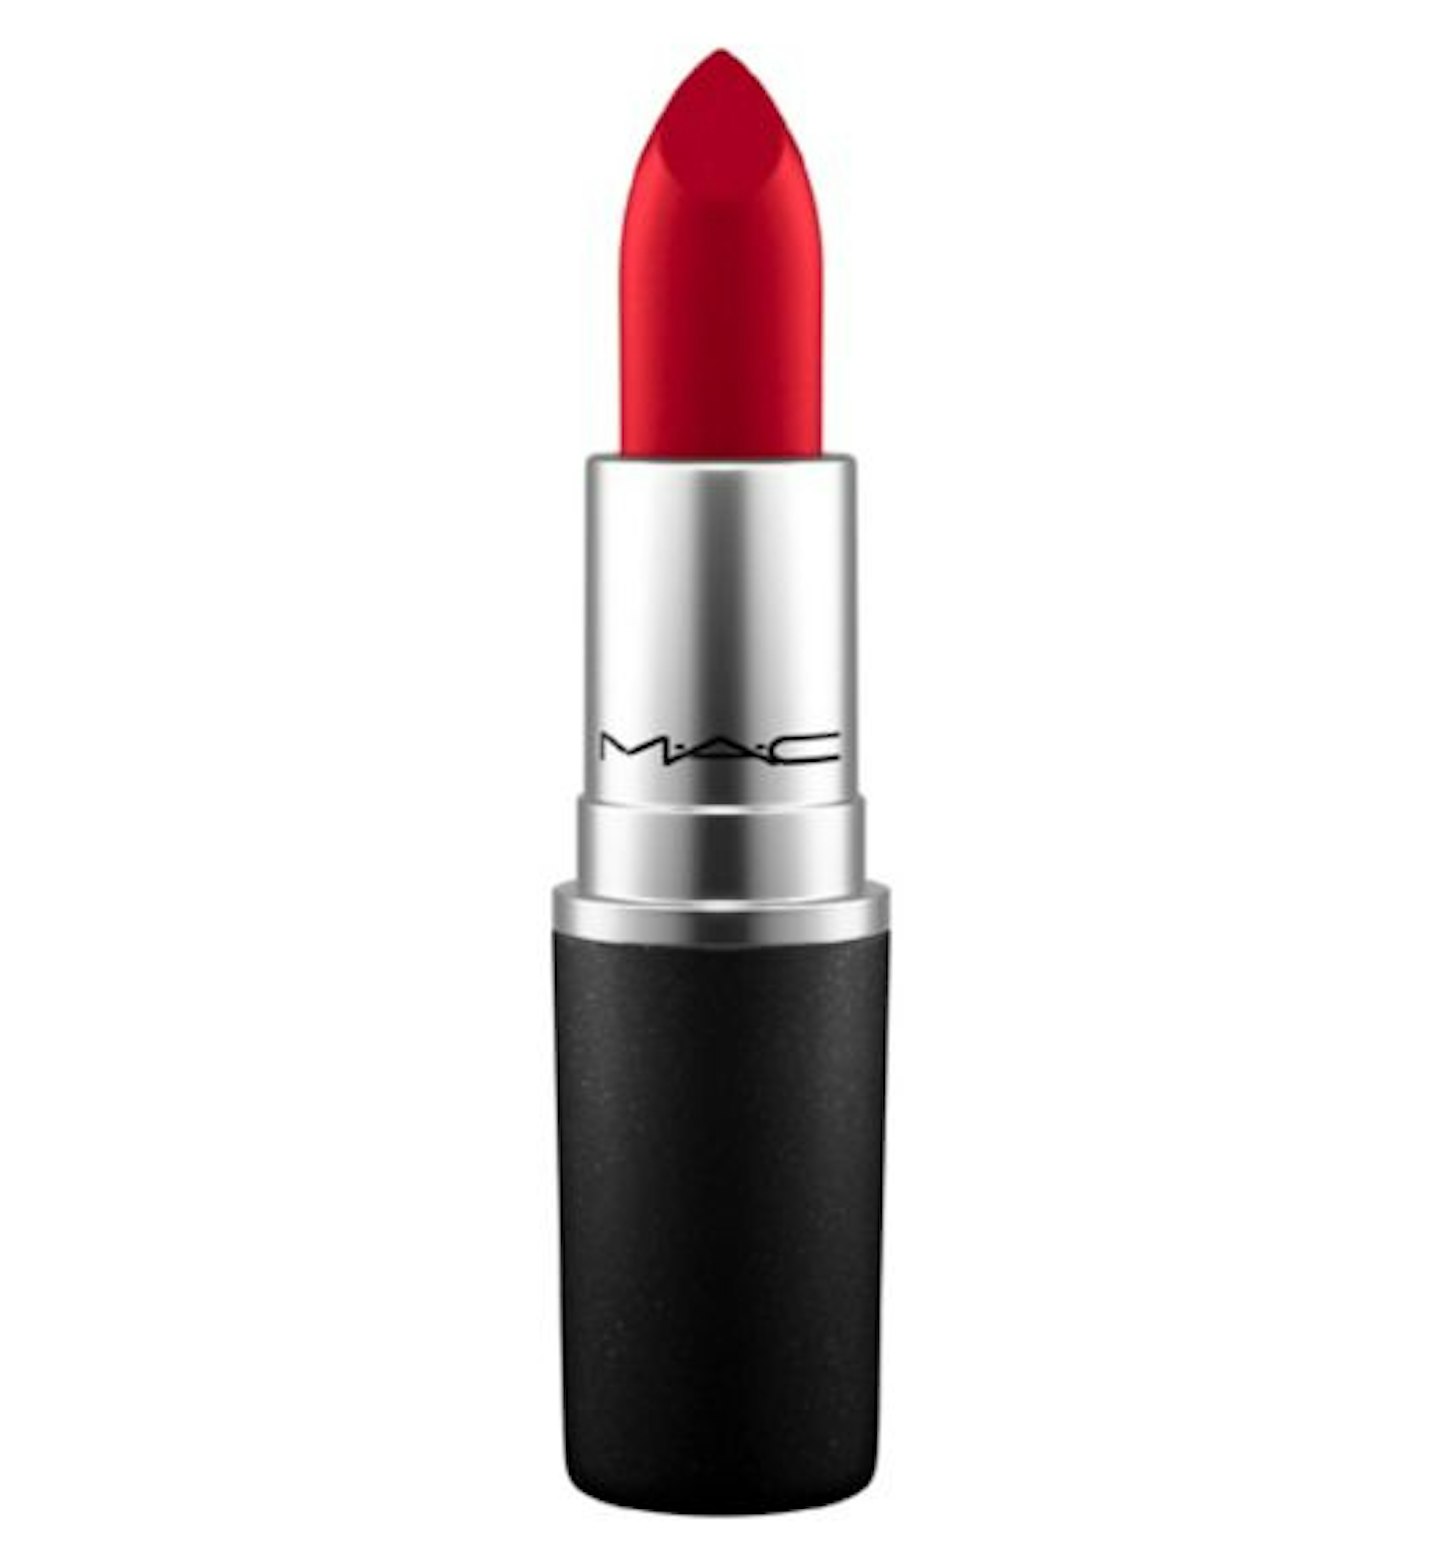 Maya Jama's fave red lipstick